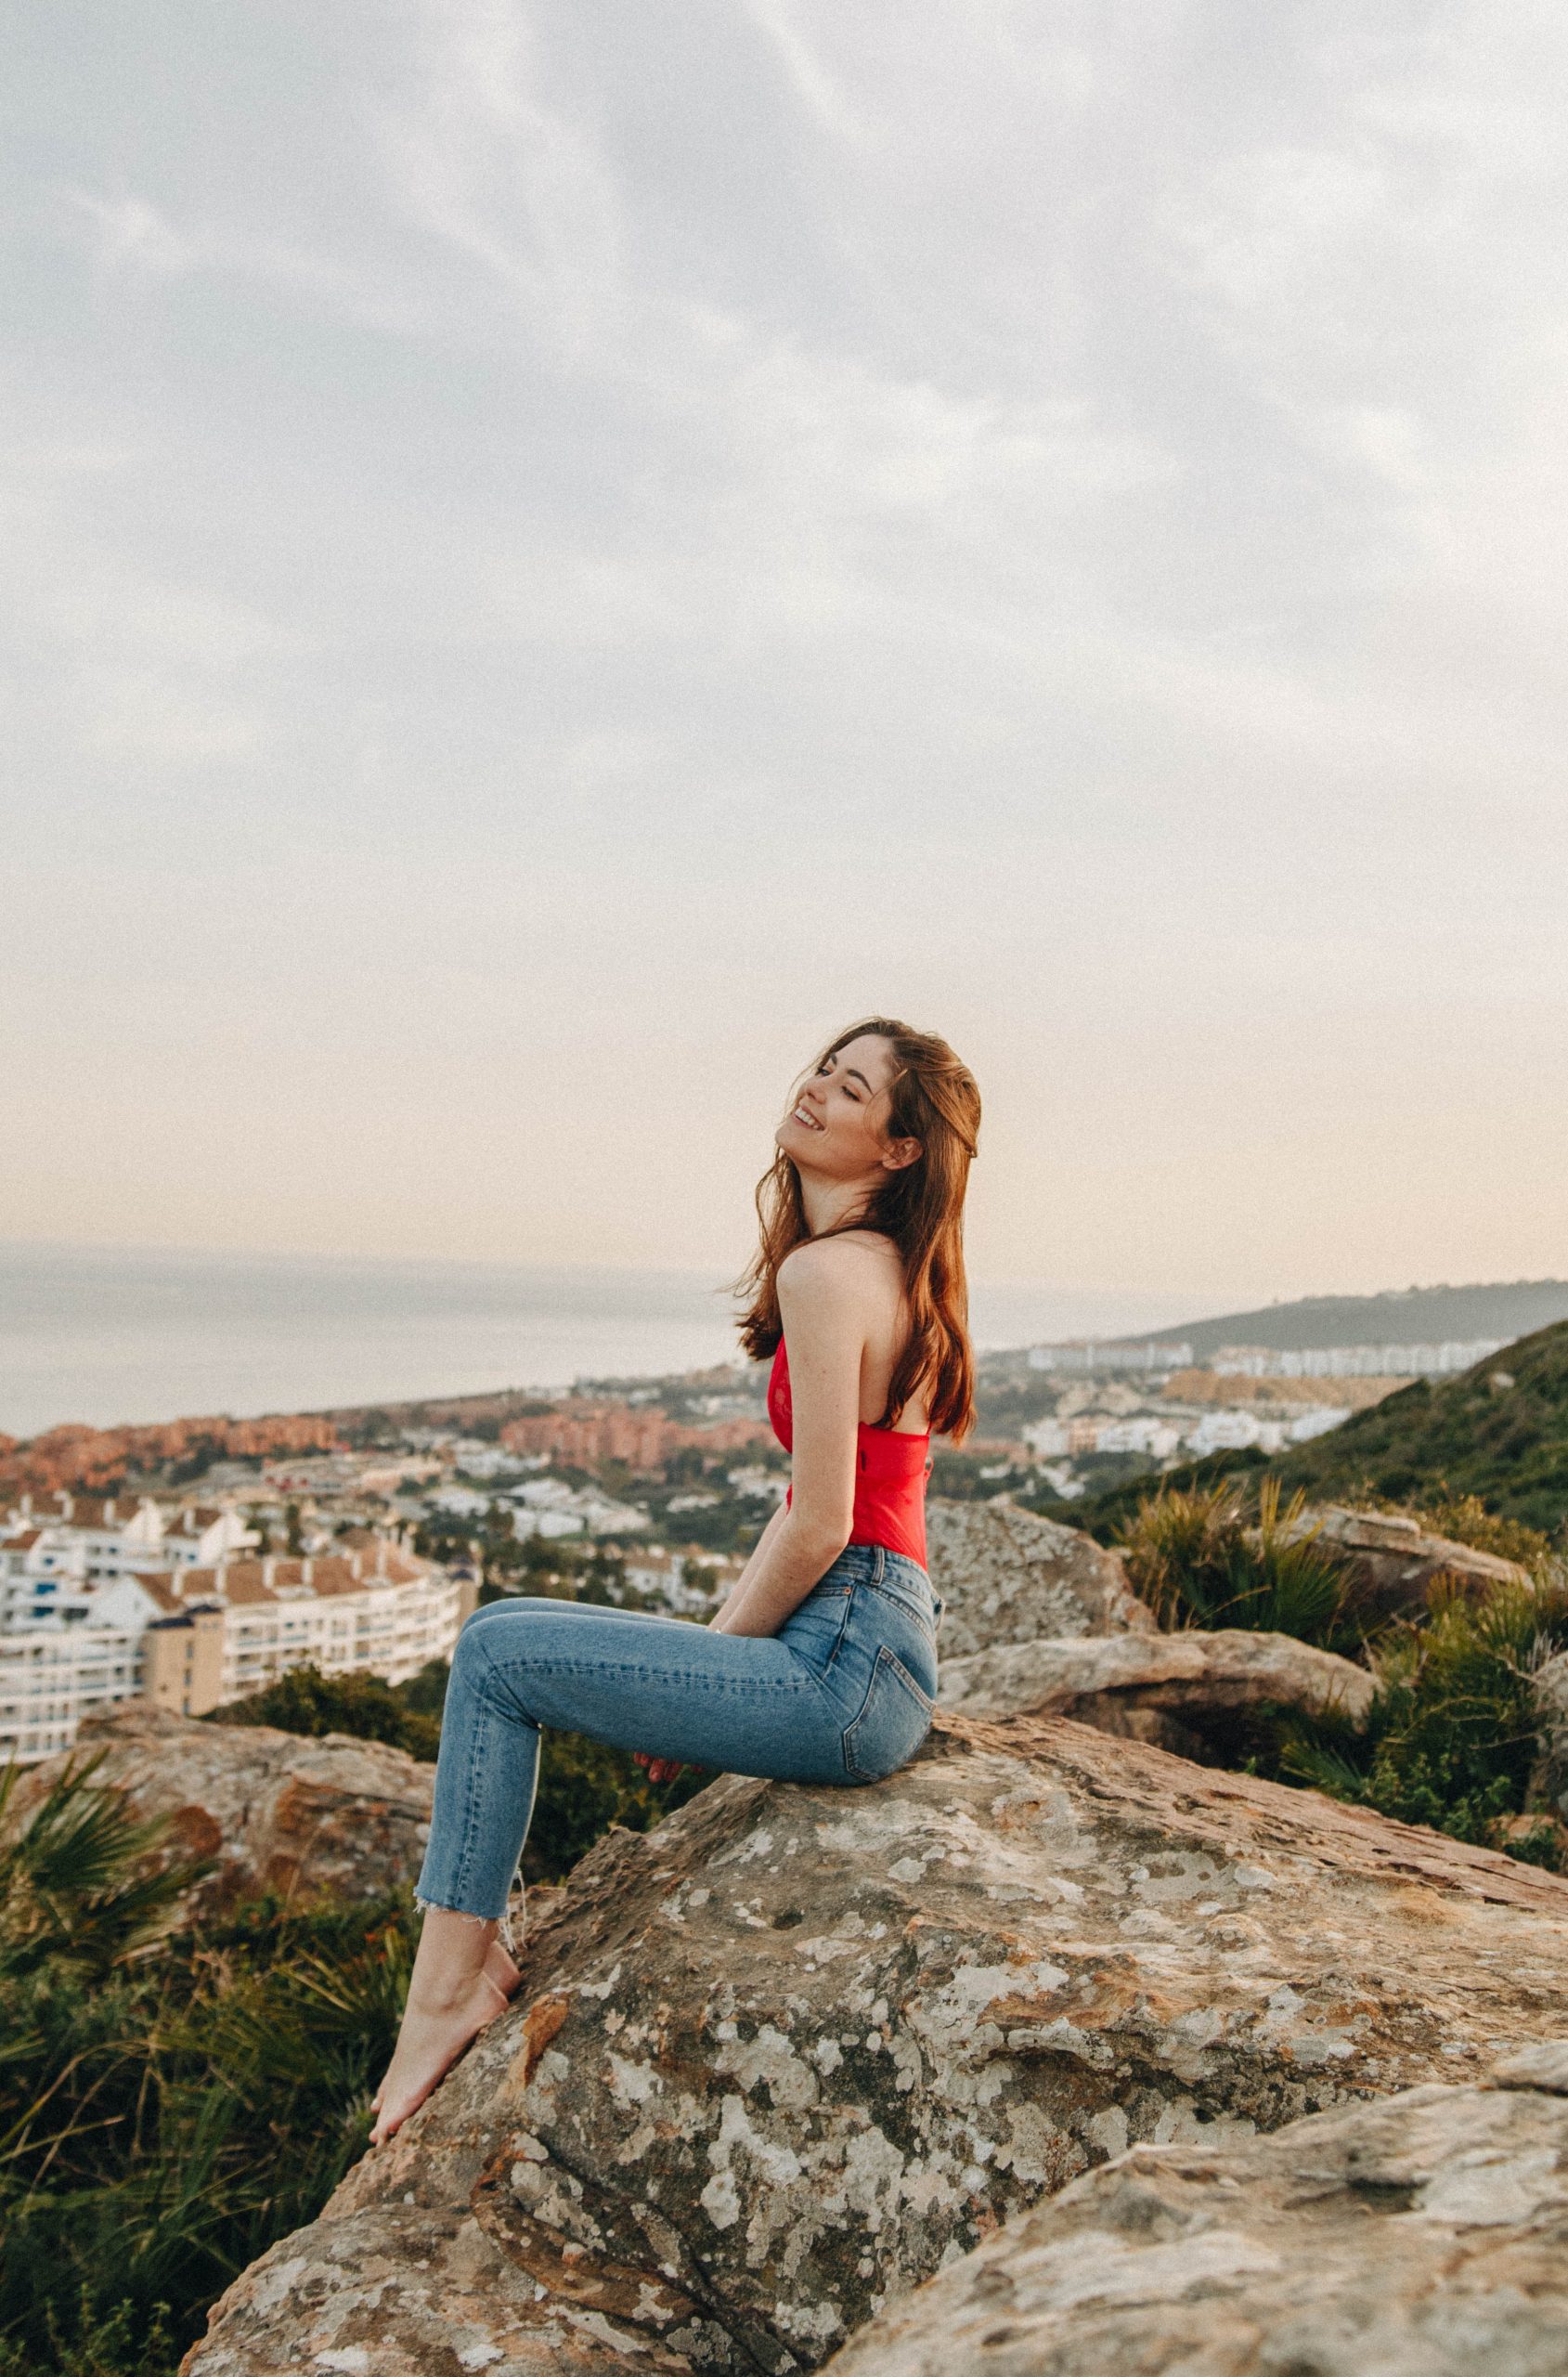 Single happy woman sitting on rocks